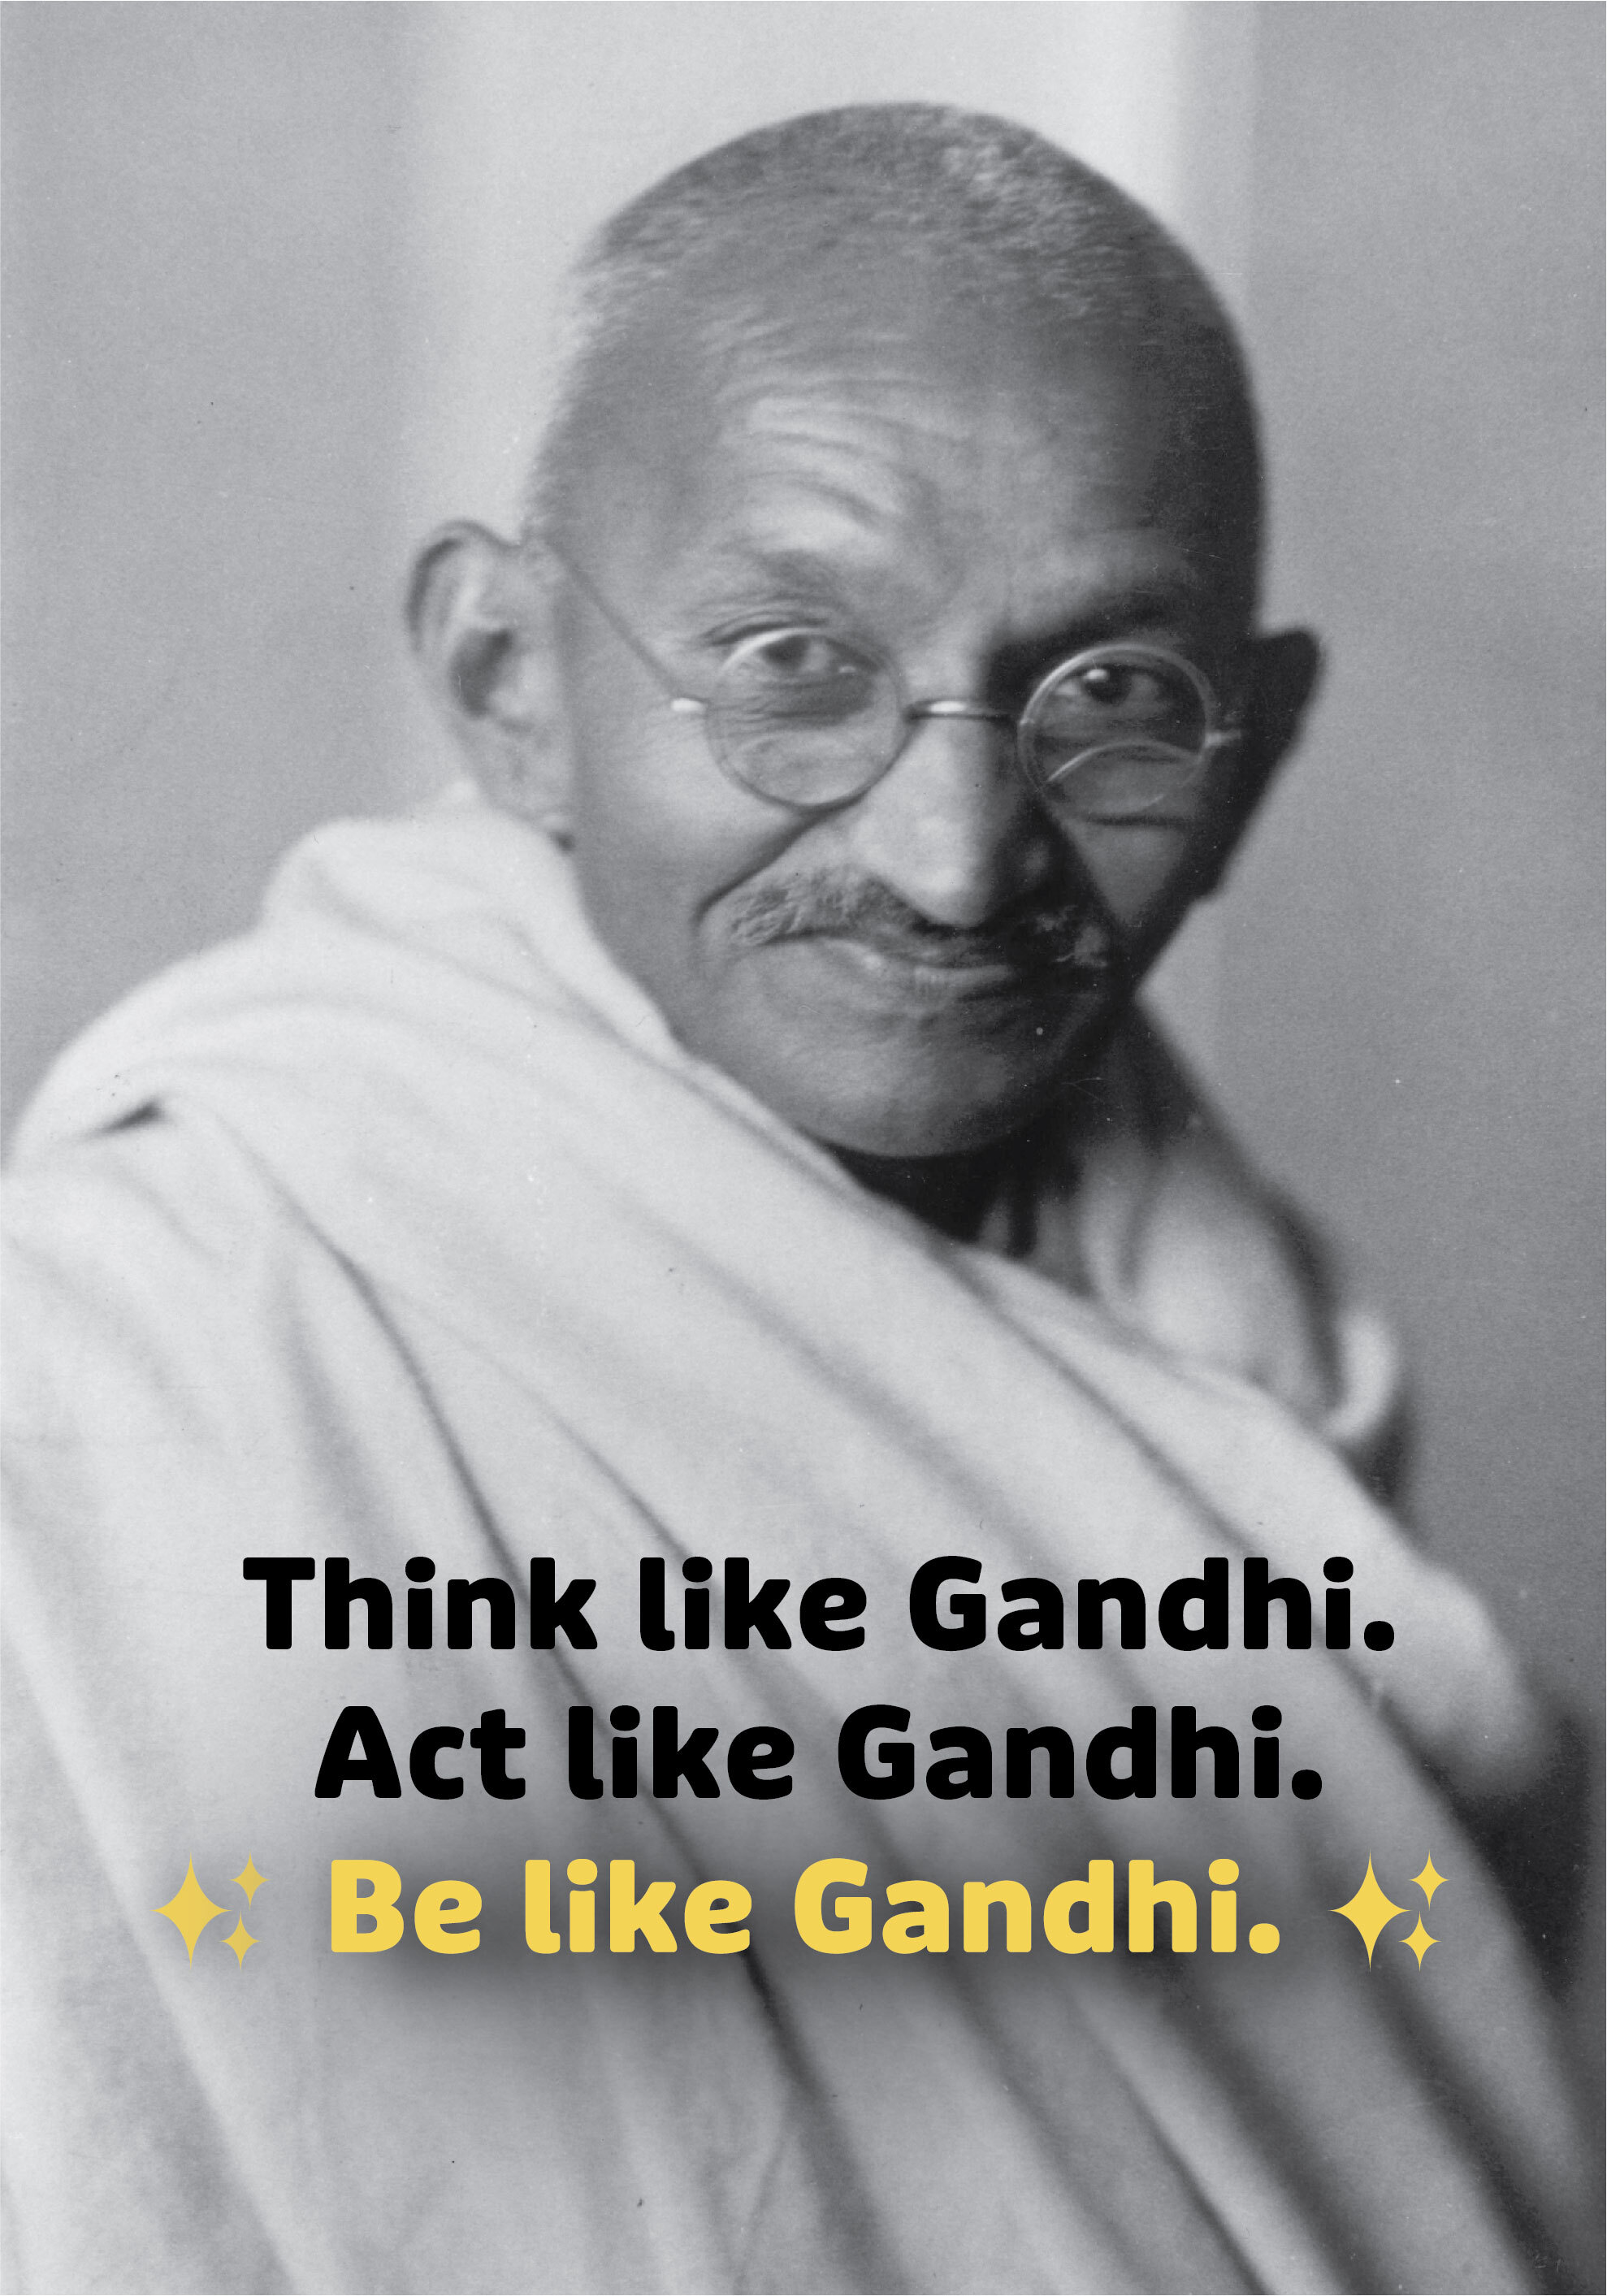 Think like Gandhi. Act like Gandhi. Be like Gandhi.